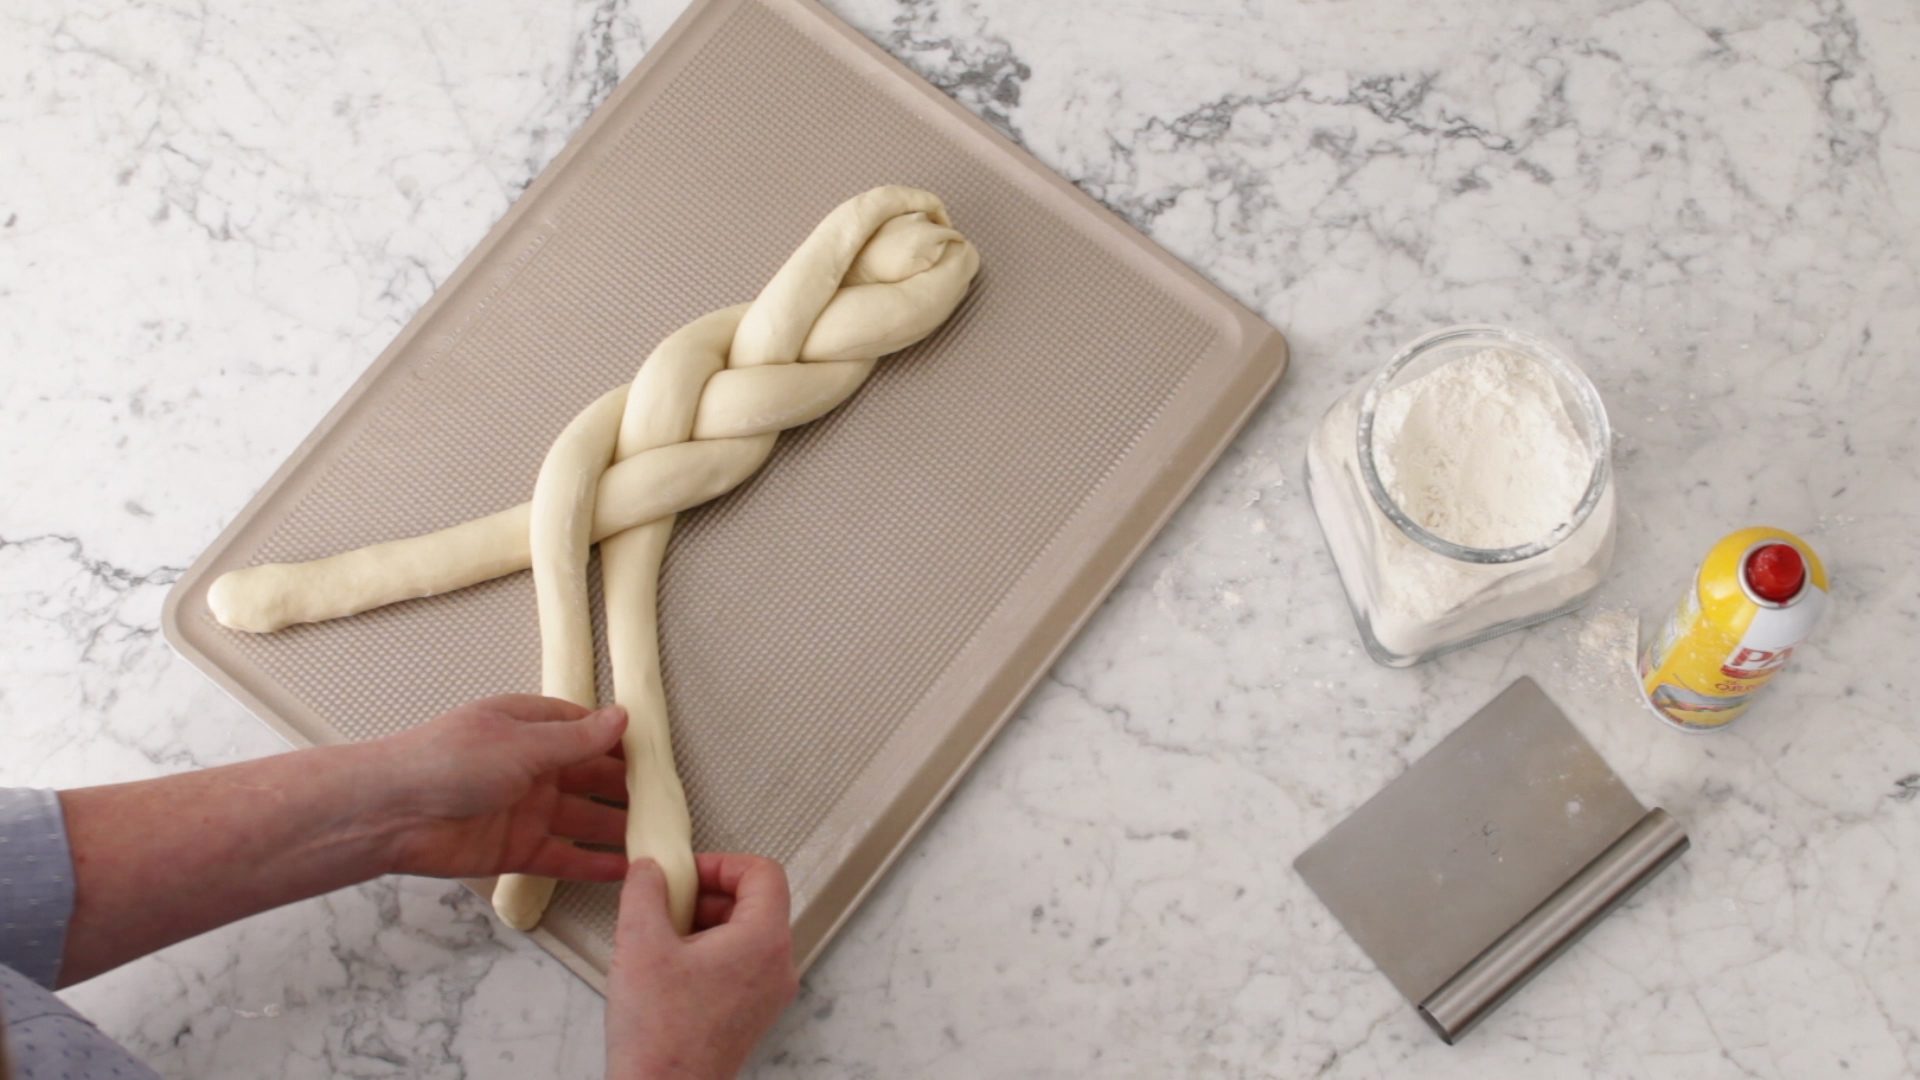 Person criss-crossing the strands of bread dough